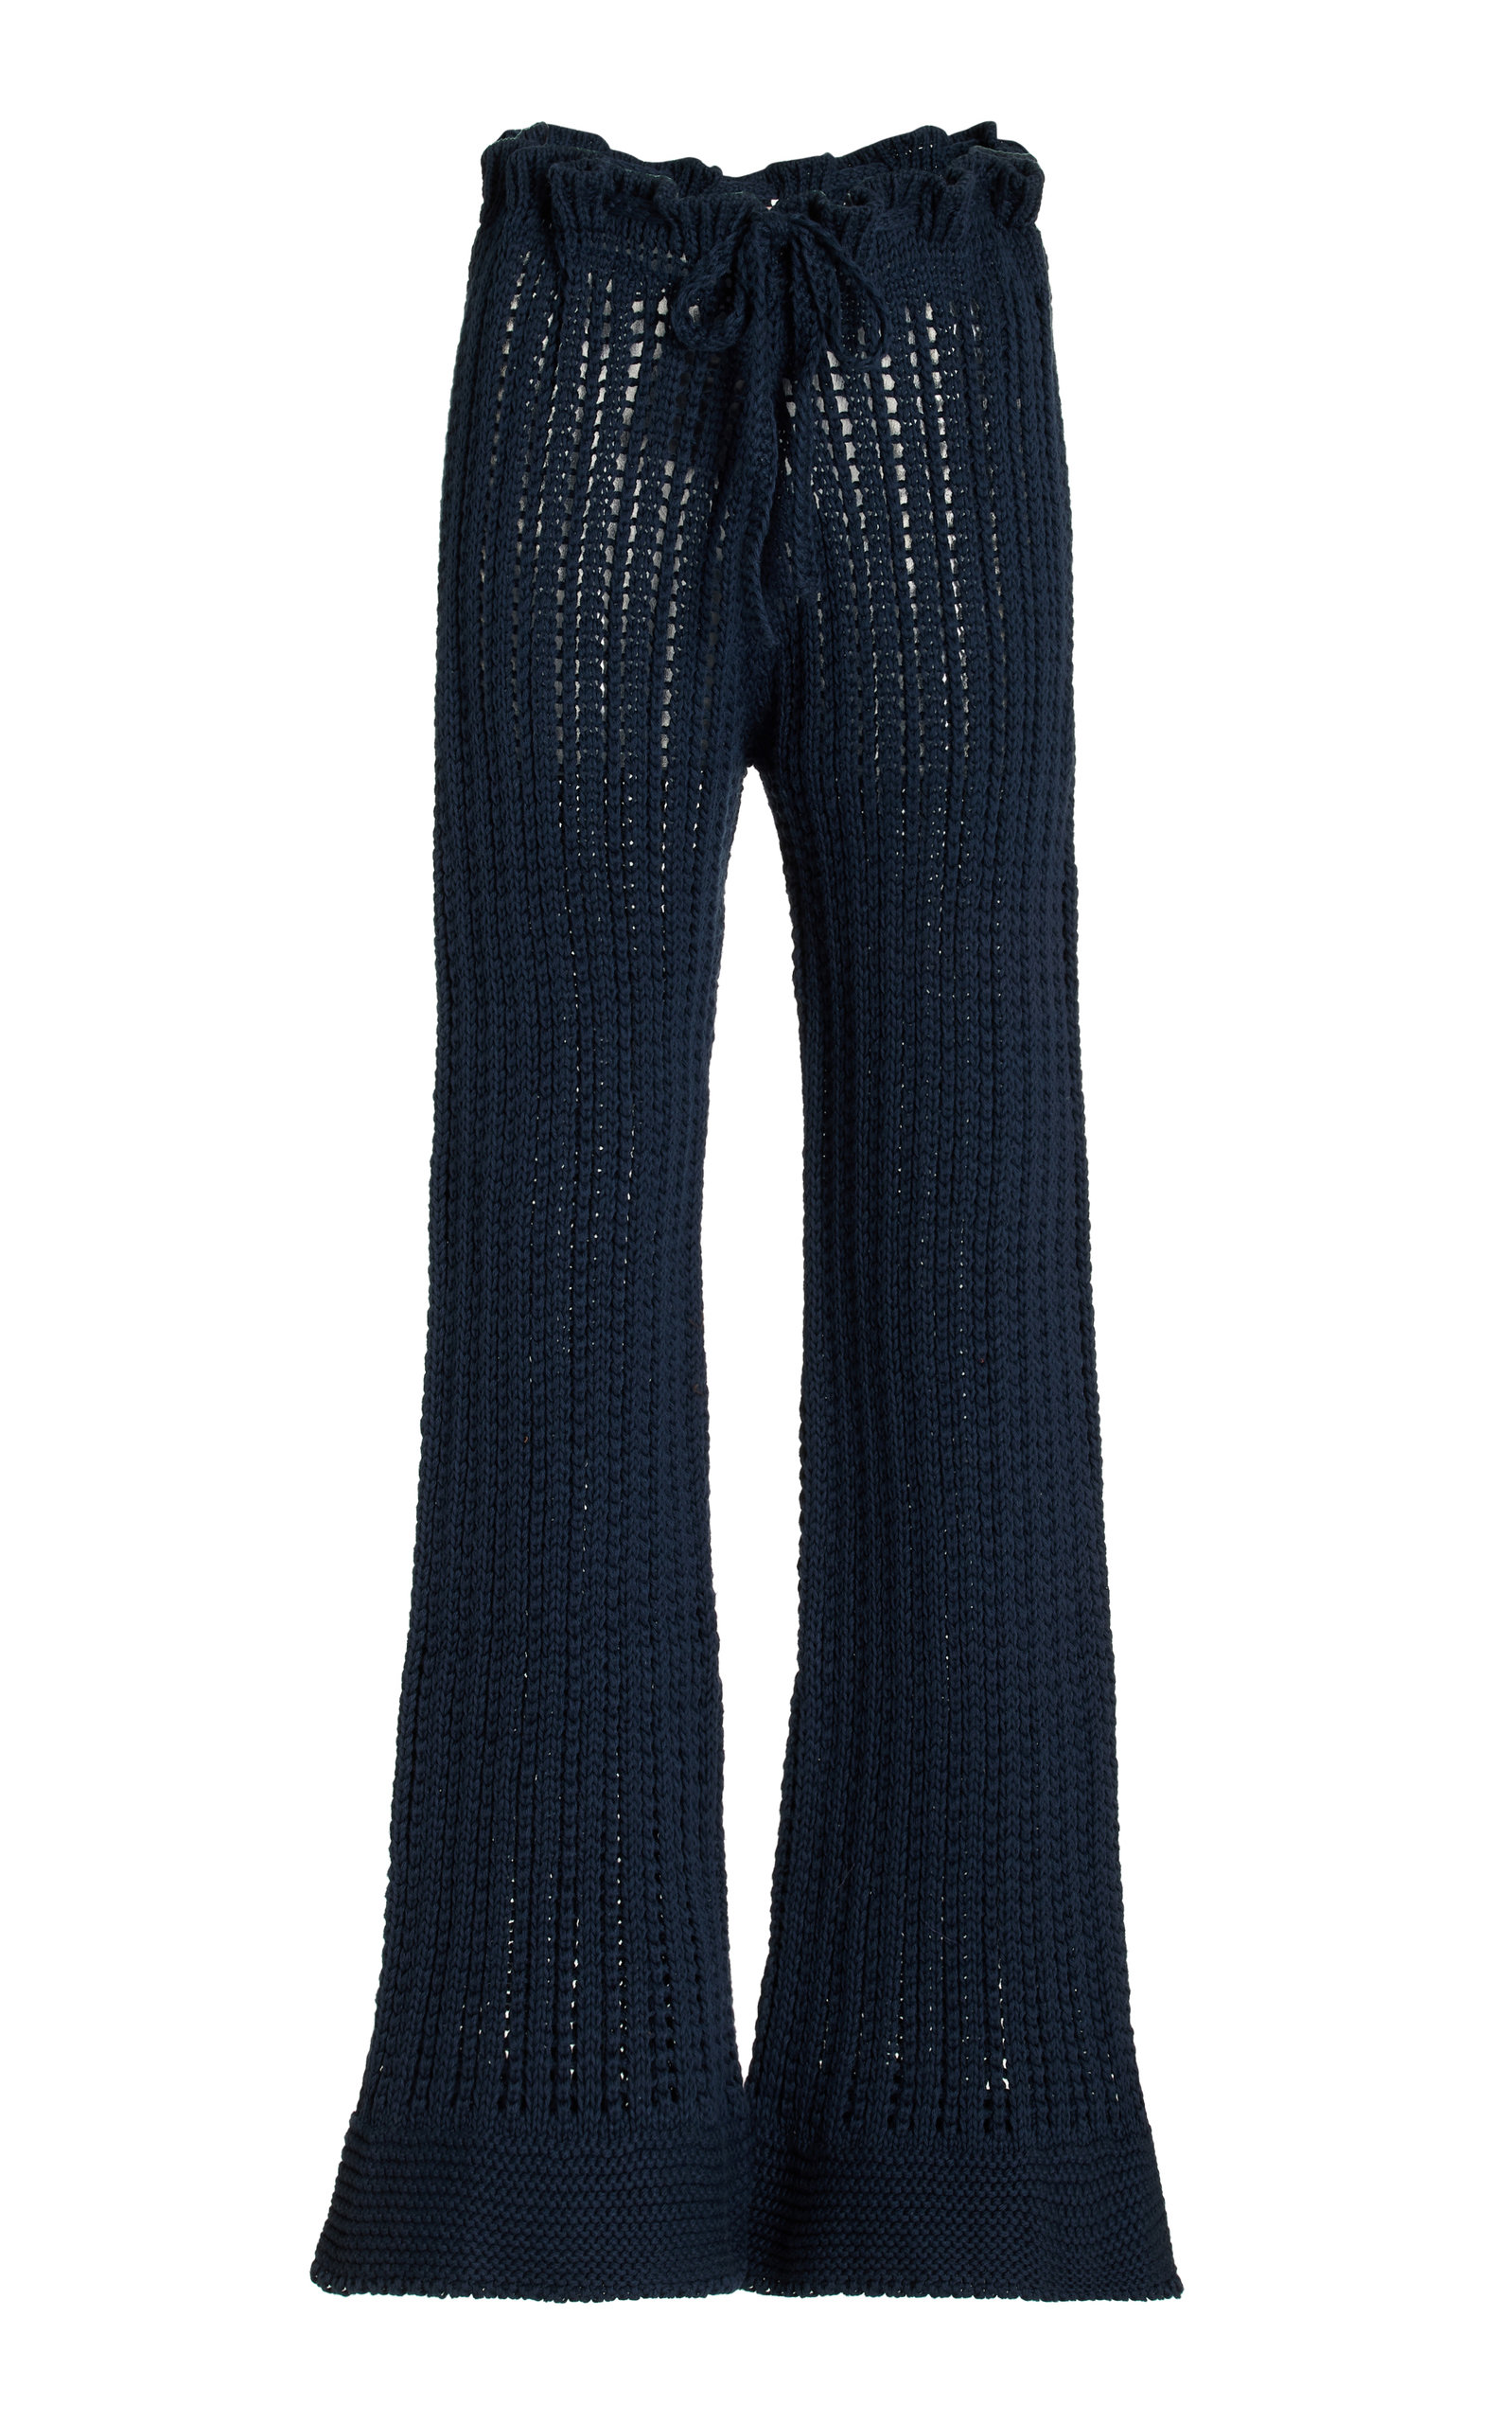 Savannah Morrow Oak Crocheted Cotton Pants In Navy